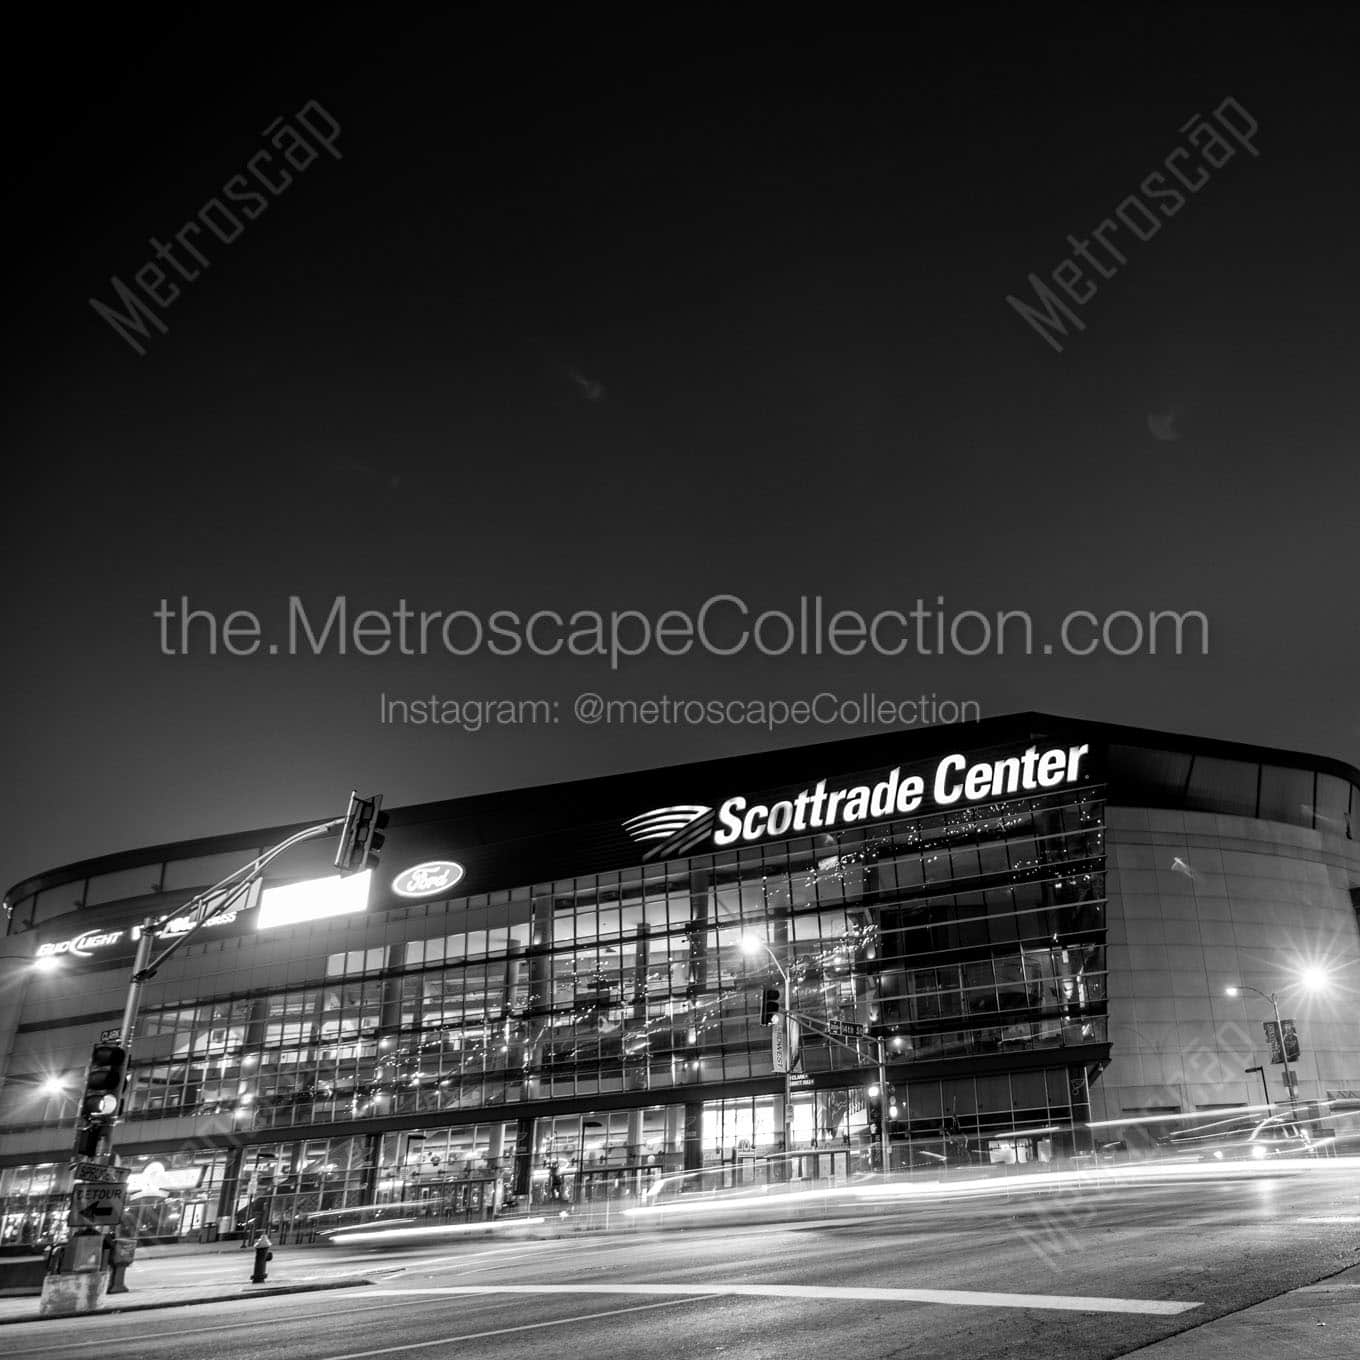 scottrade center at night Black & White Office Art